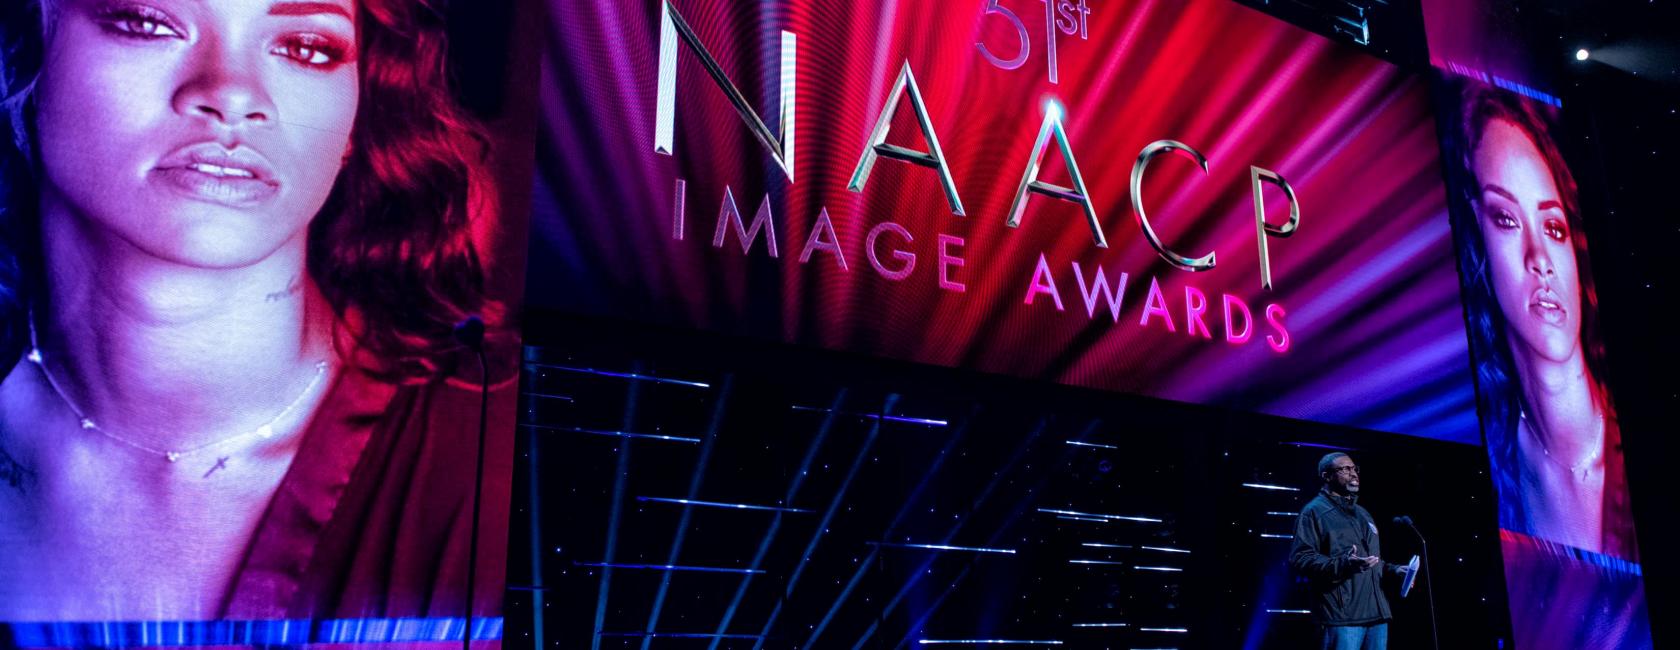 Image Awards Stage - Rihanna